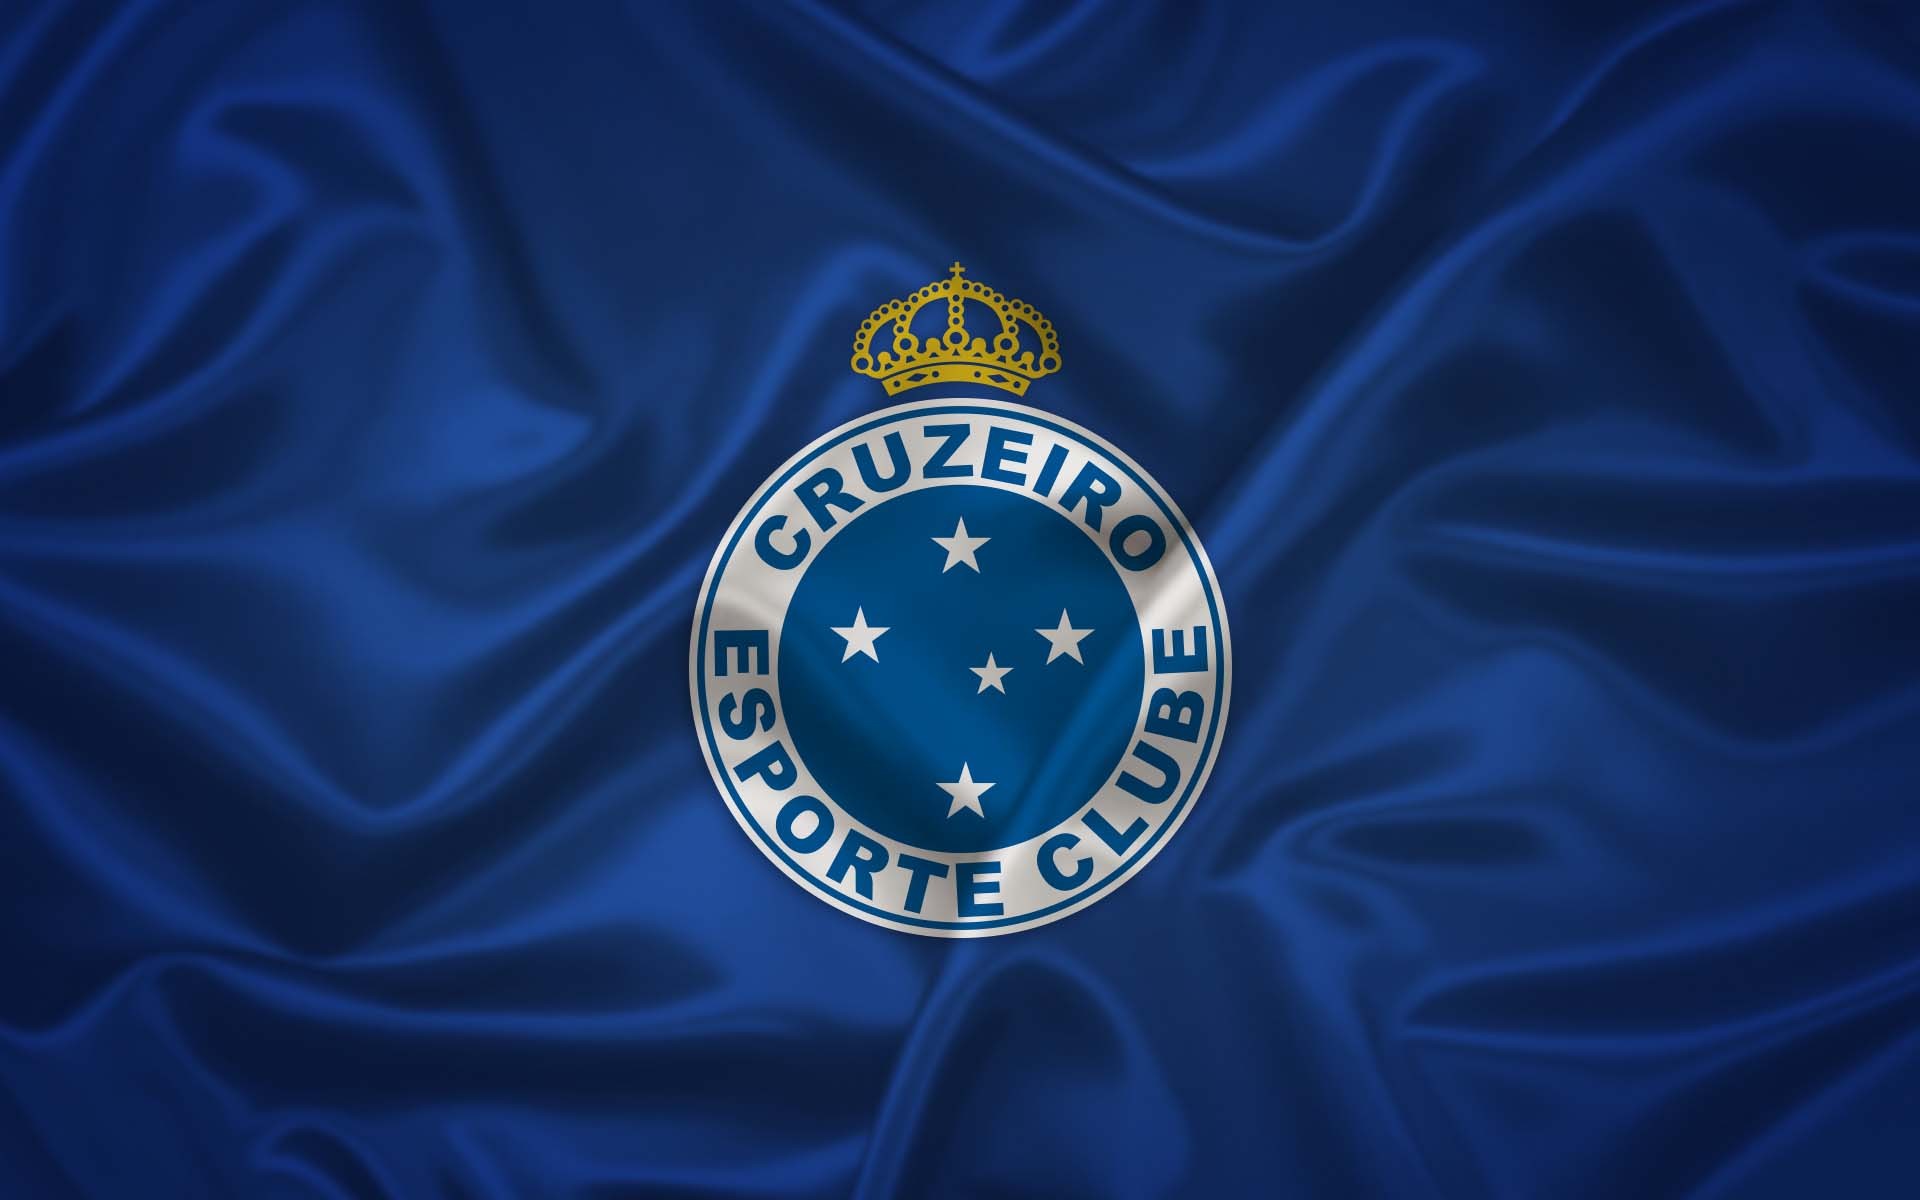 General 1920x1200 Cruzeiro Esporte Clube Brazil soccer soccer clubs logo sport digital art